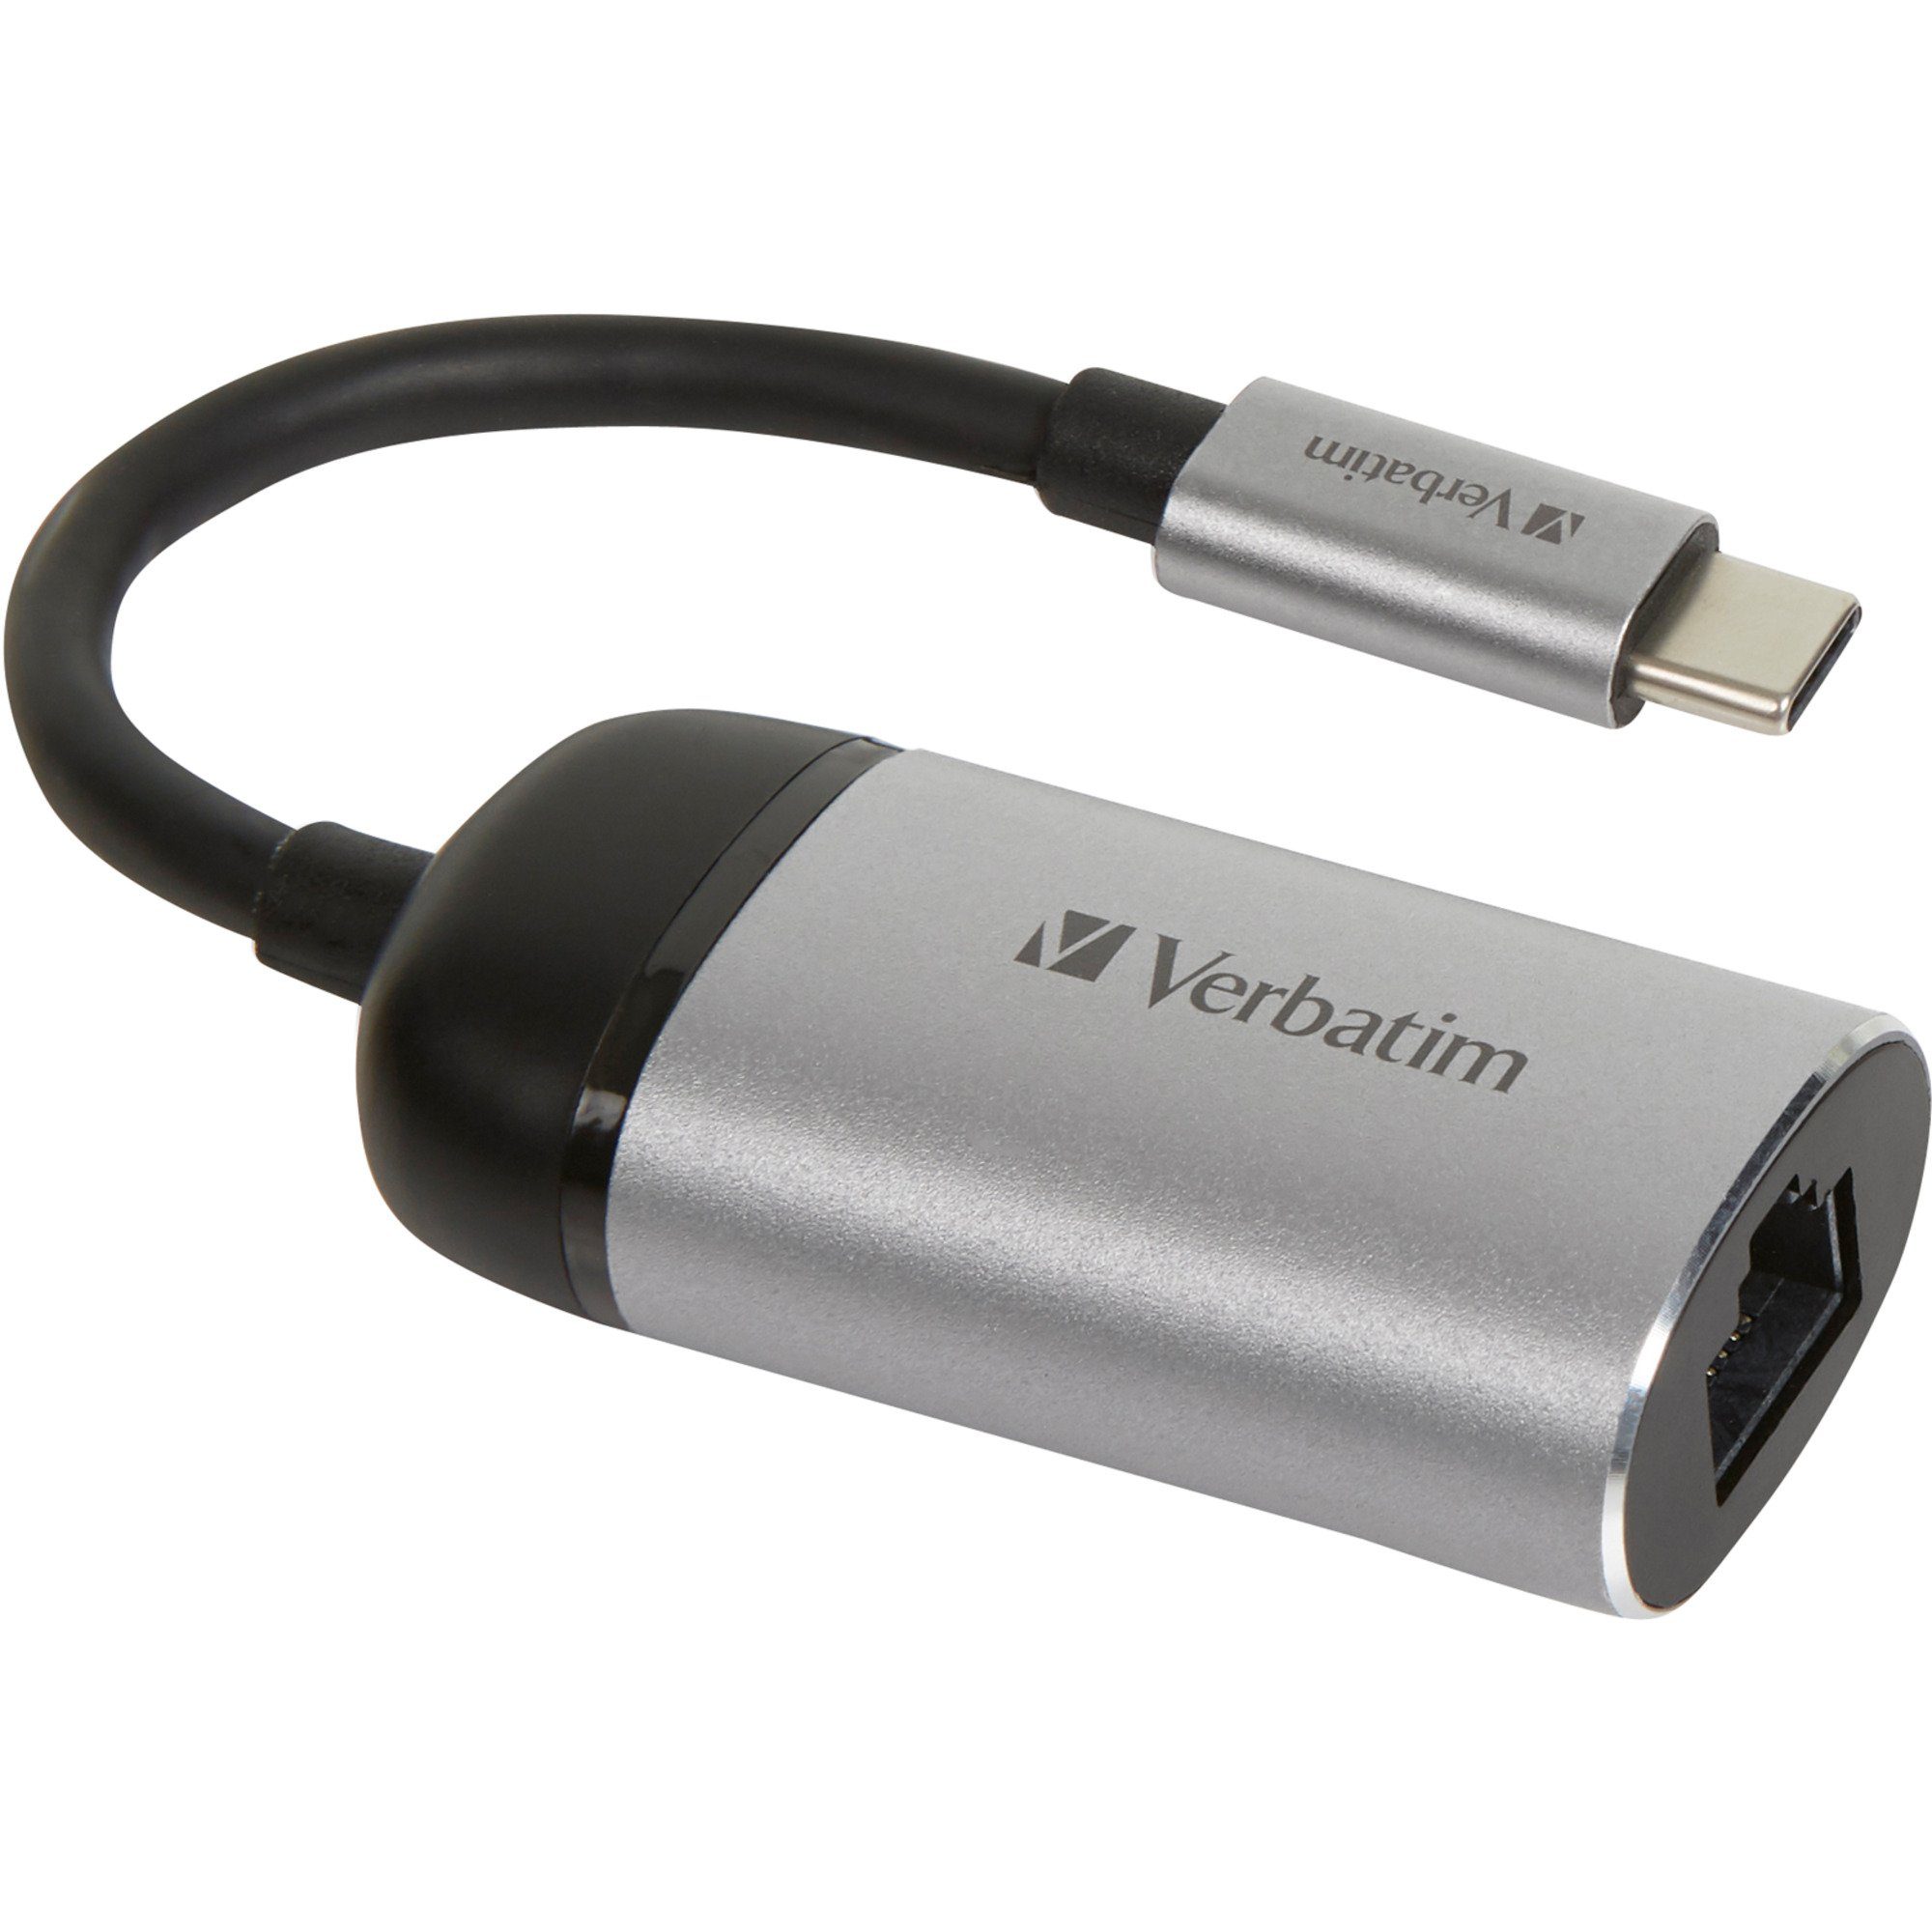 > USB Stecker Verbatim Verbatim 3.2 1 Adapter, USB-C Gen Computer-Kabel